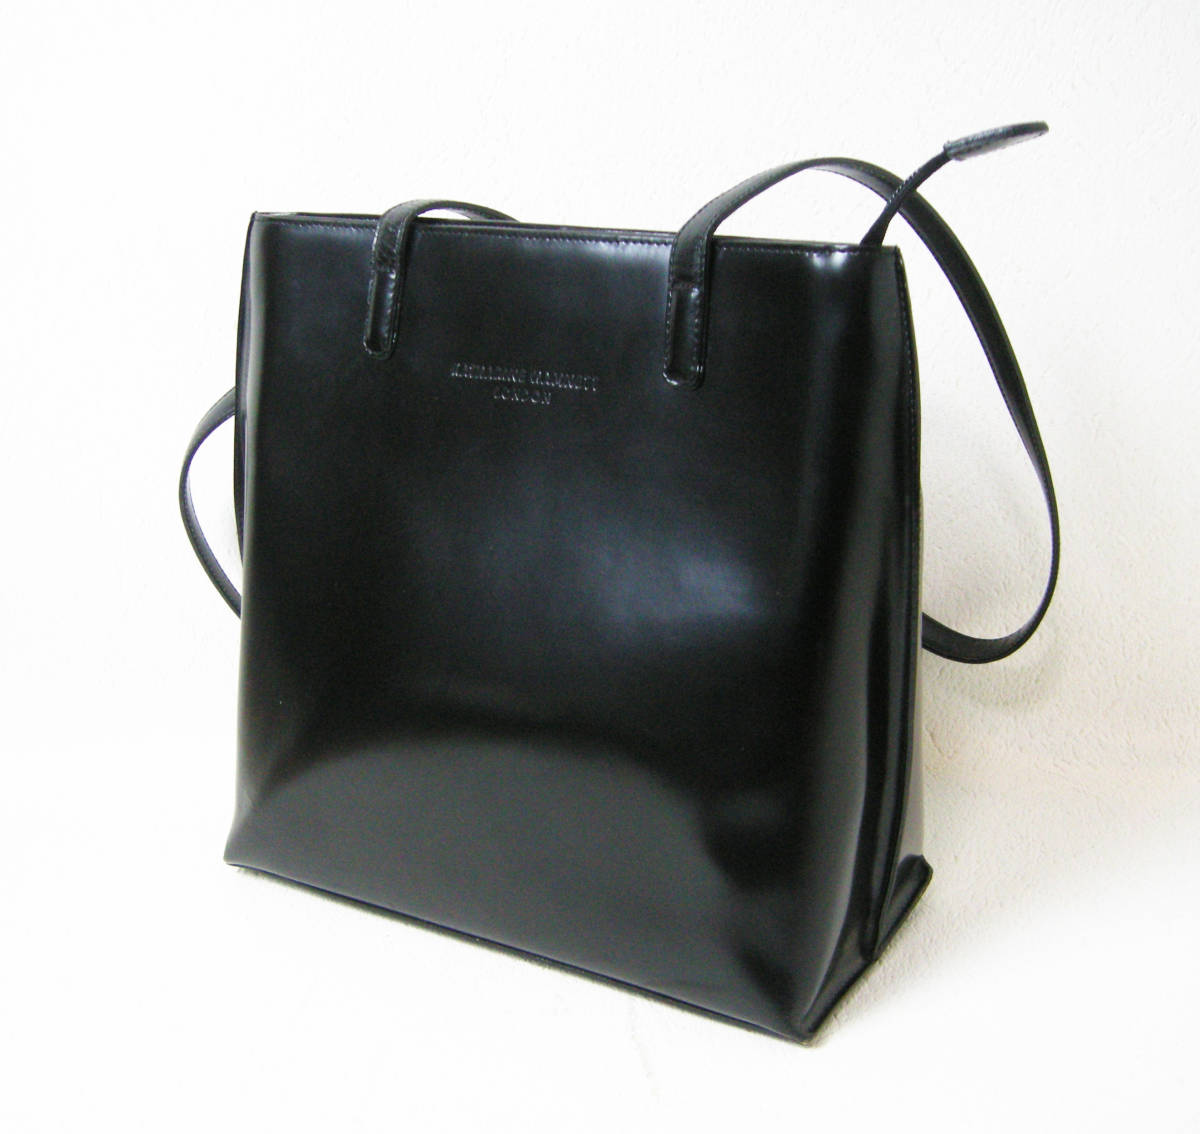 #KATHARINE HAMNETT[ Katharine Hamnett ] black leather tote bag #